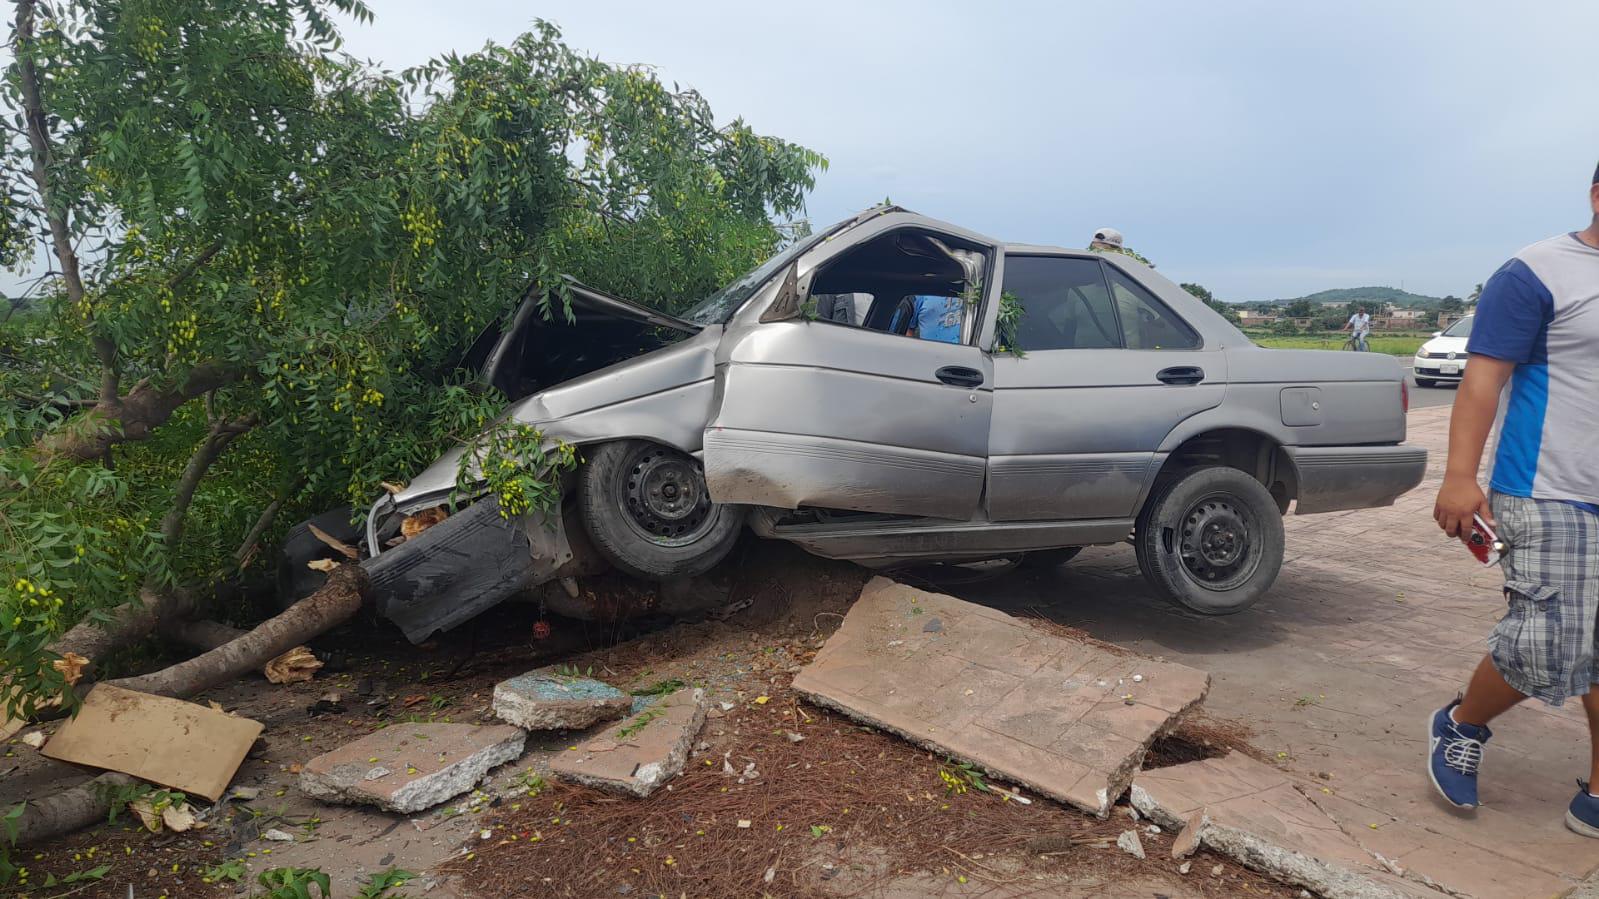 $!Auto choca contra árbol en carretera a la altura de El Pozole, Mazatlán